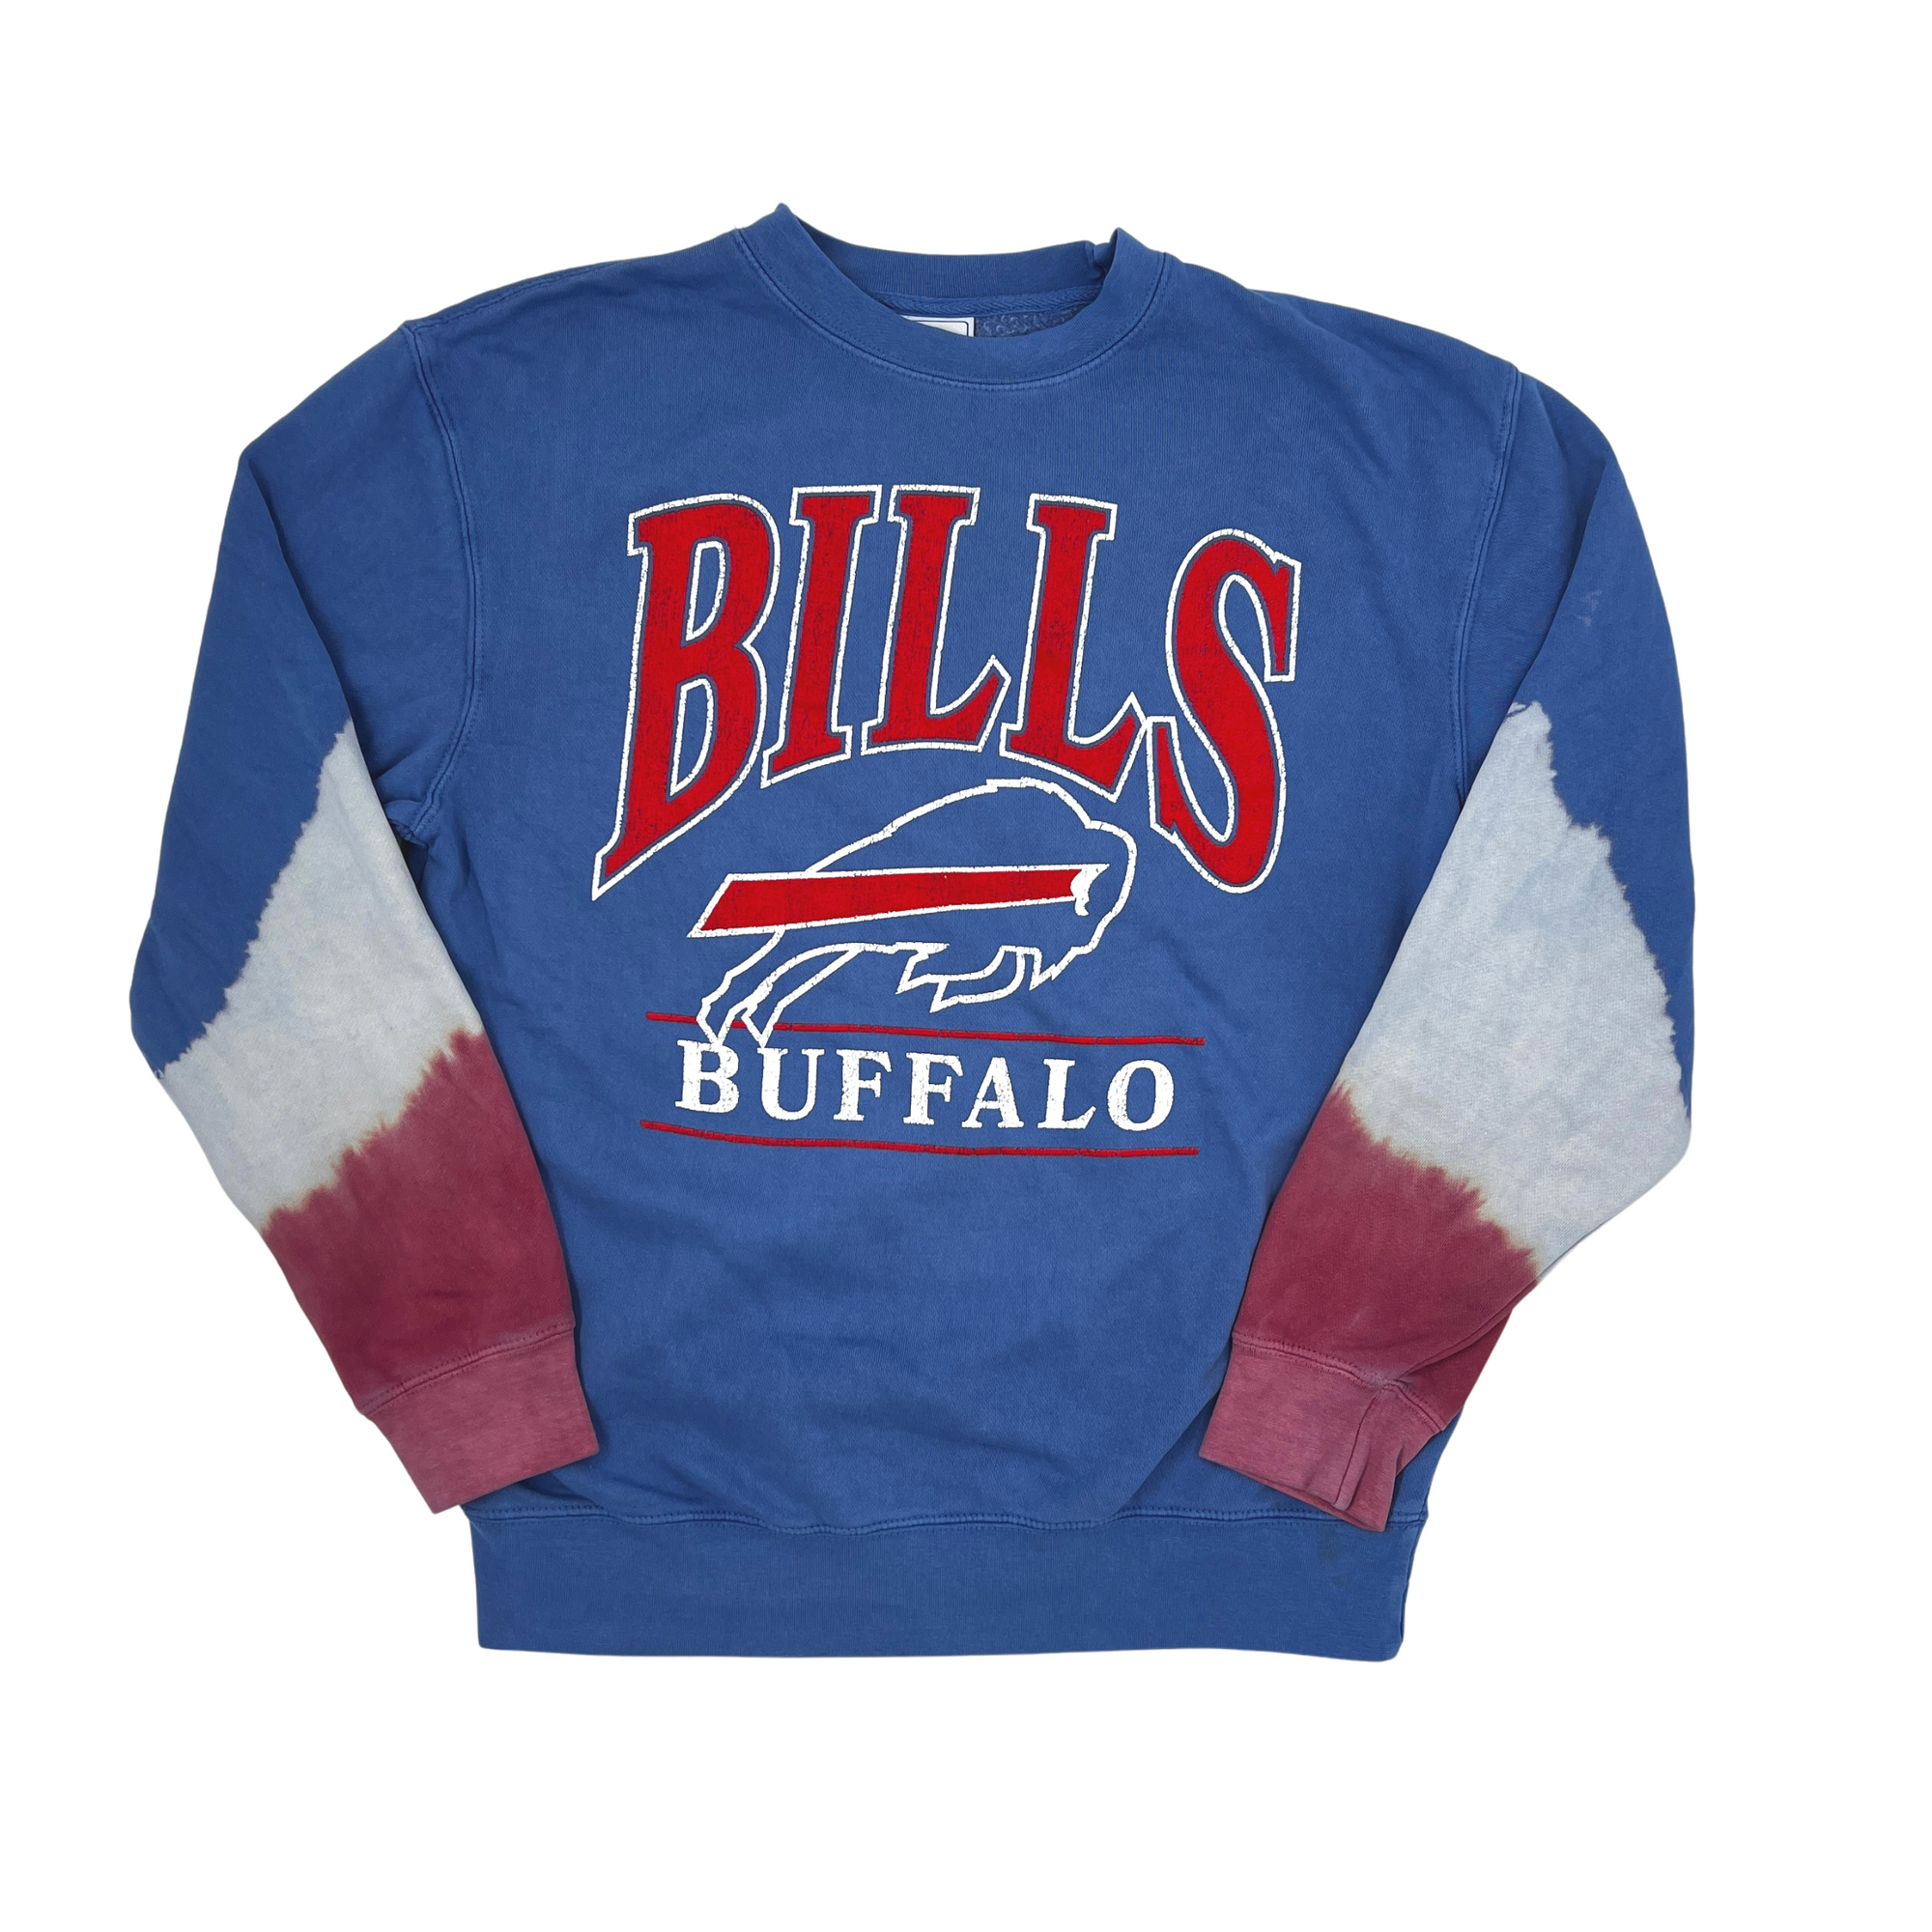 BUFFALO BILLS NFL Team Apparel women's t-shirt size L : r